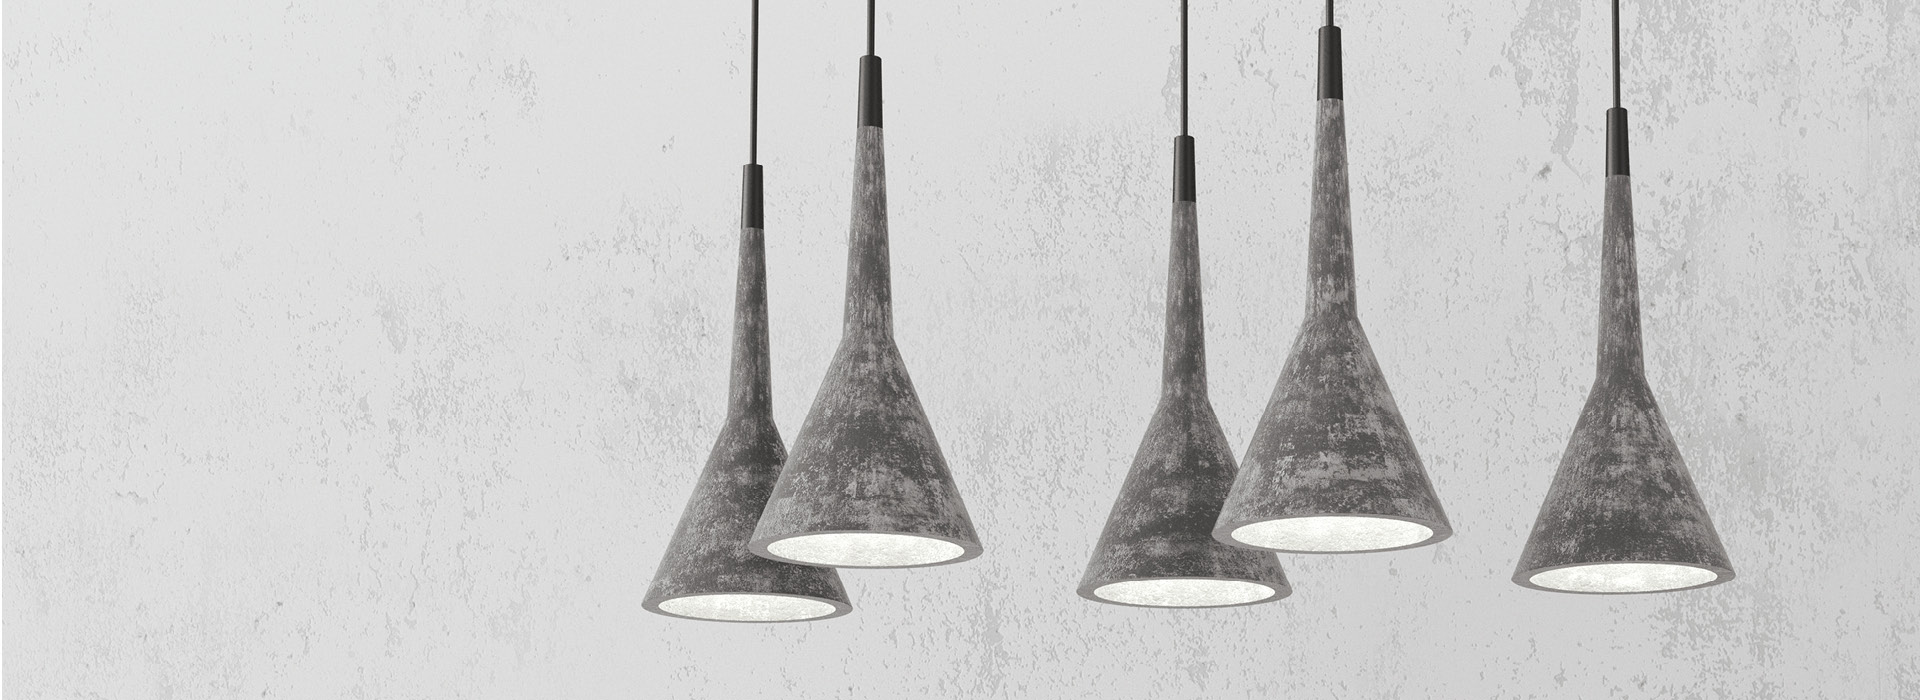 Lampen aus Beton Design, grau, marmoriert